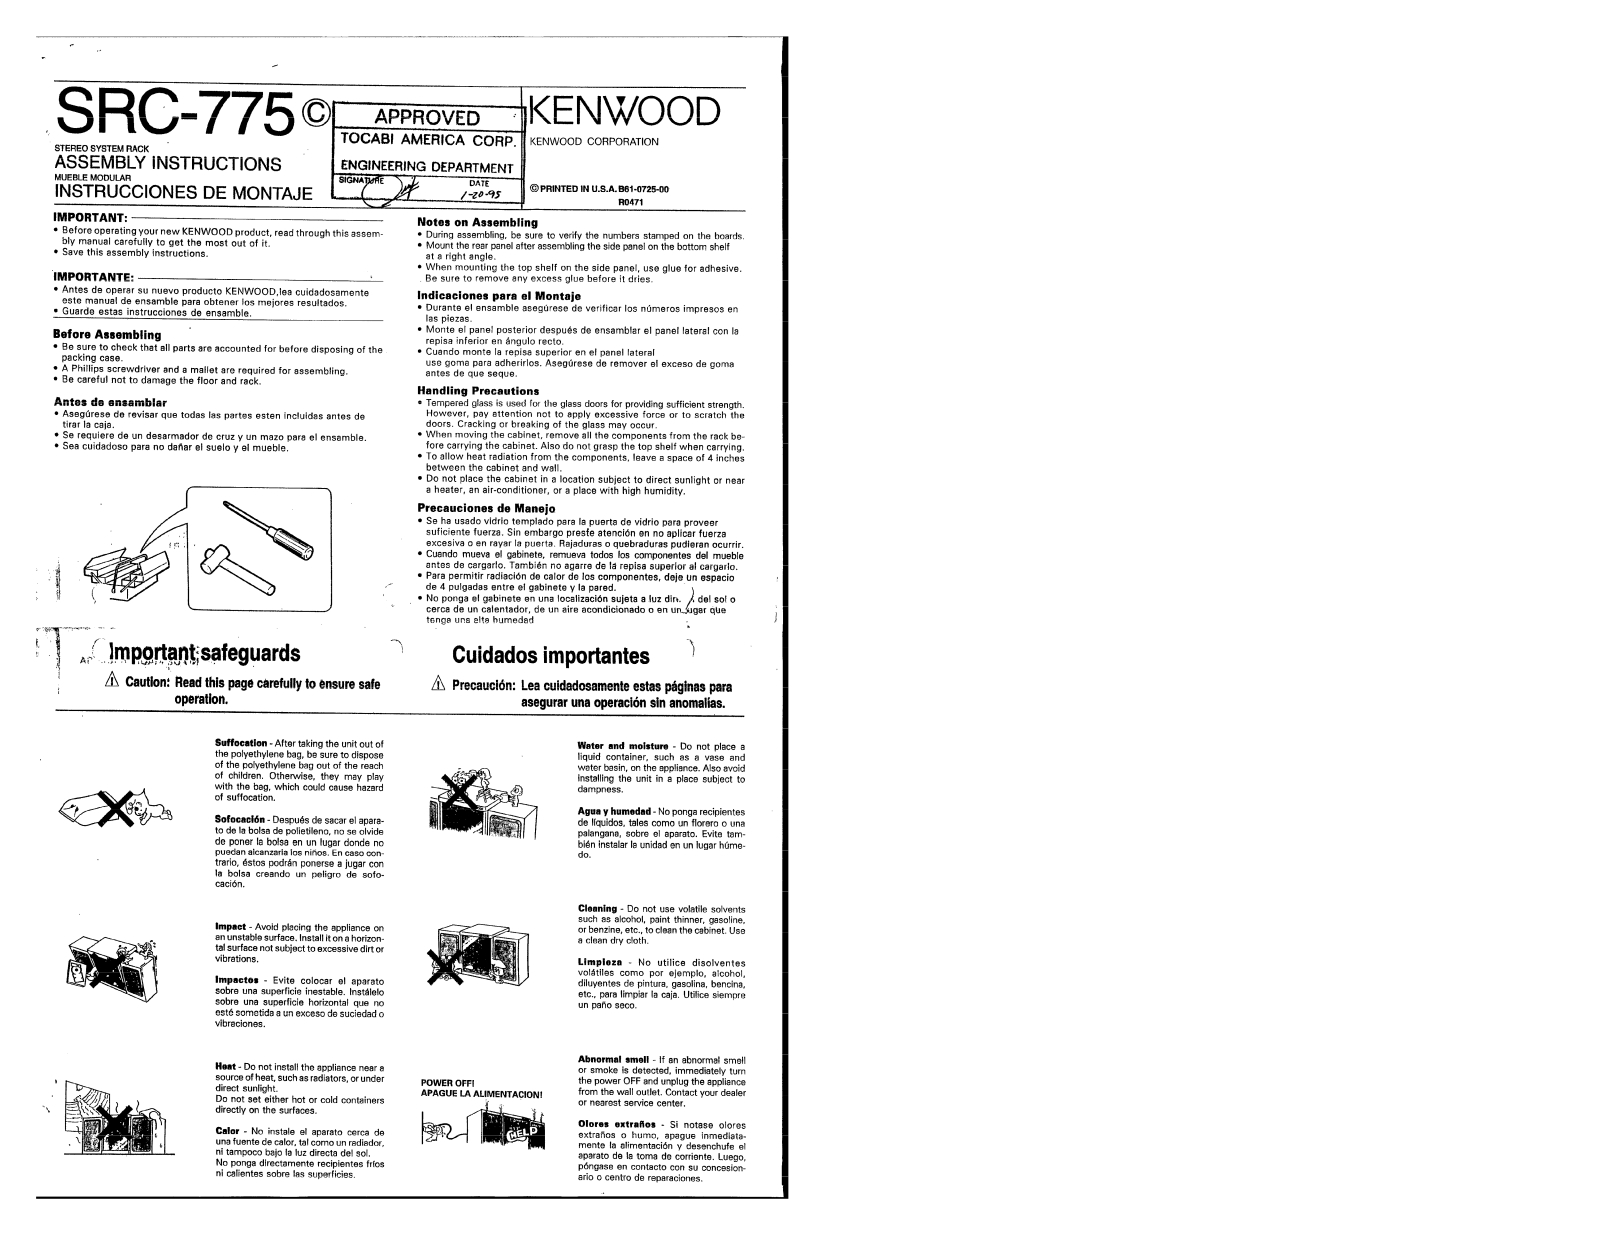 Kenwood SRC-775 Owner's Manual